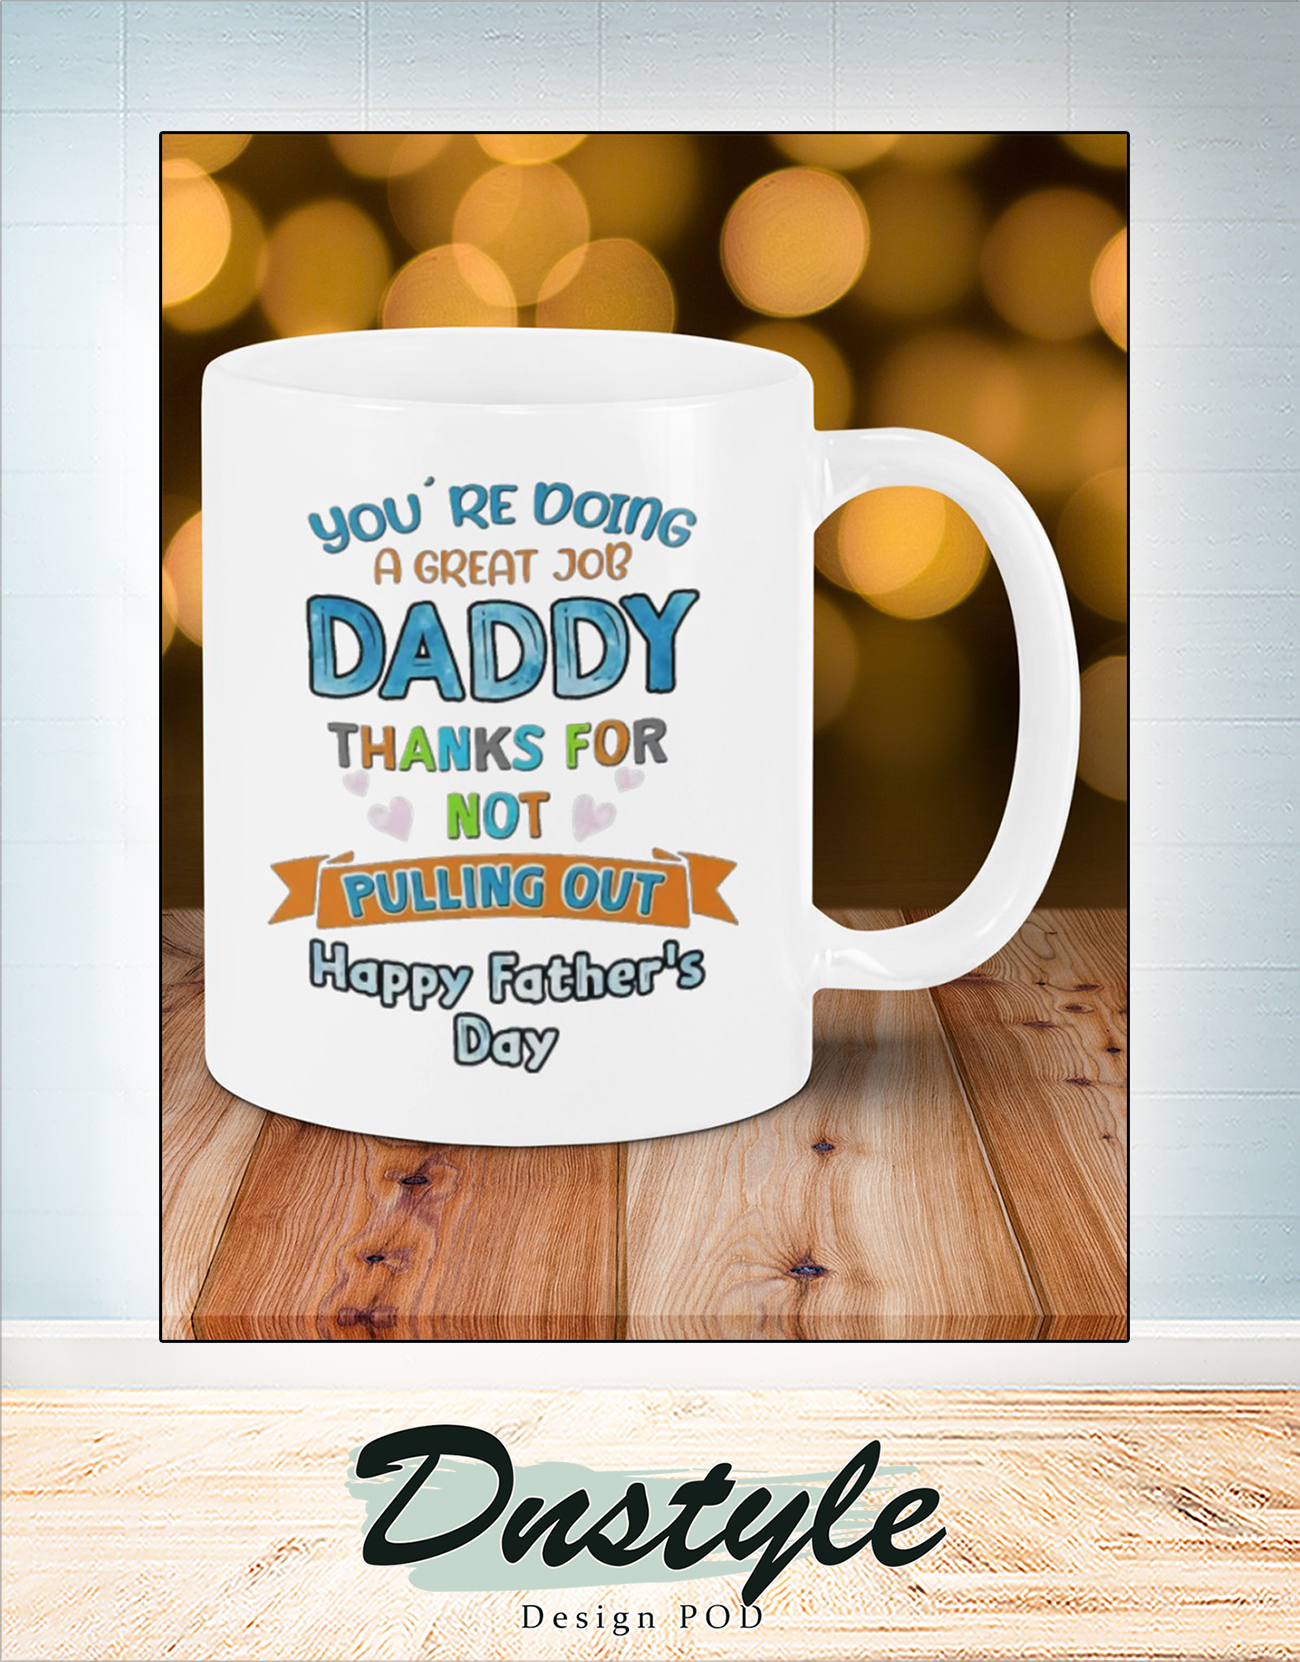 You're doing a great job daddy mug 2